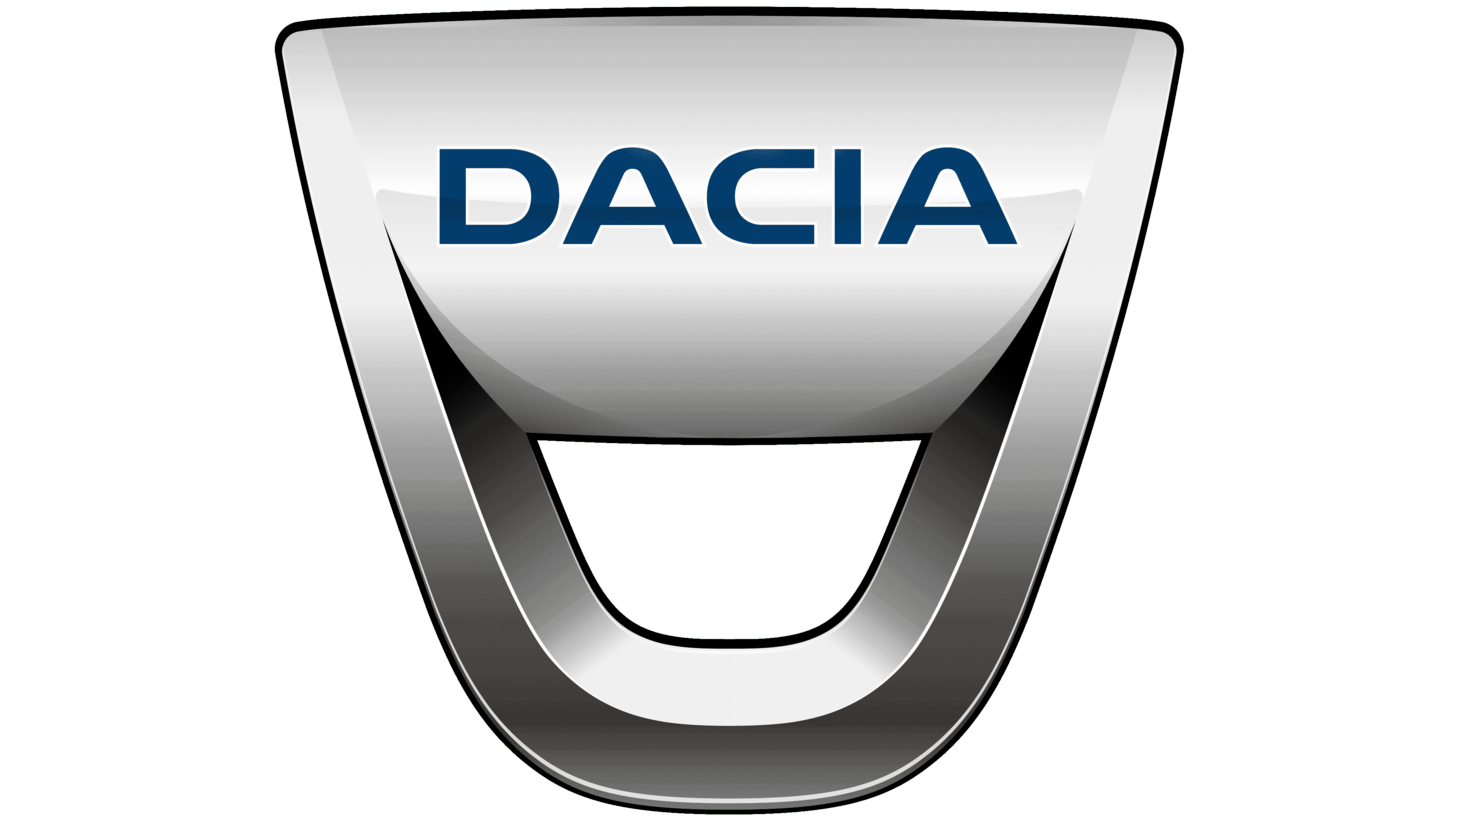 Dacia sign 2015 2021